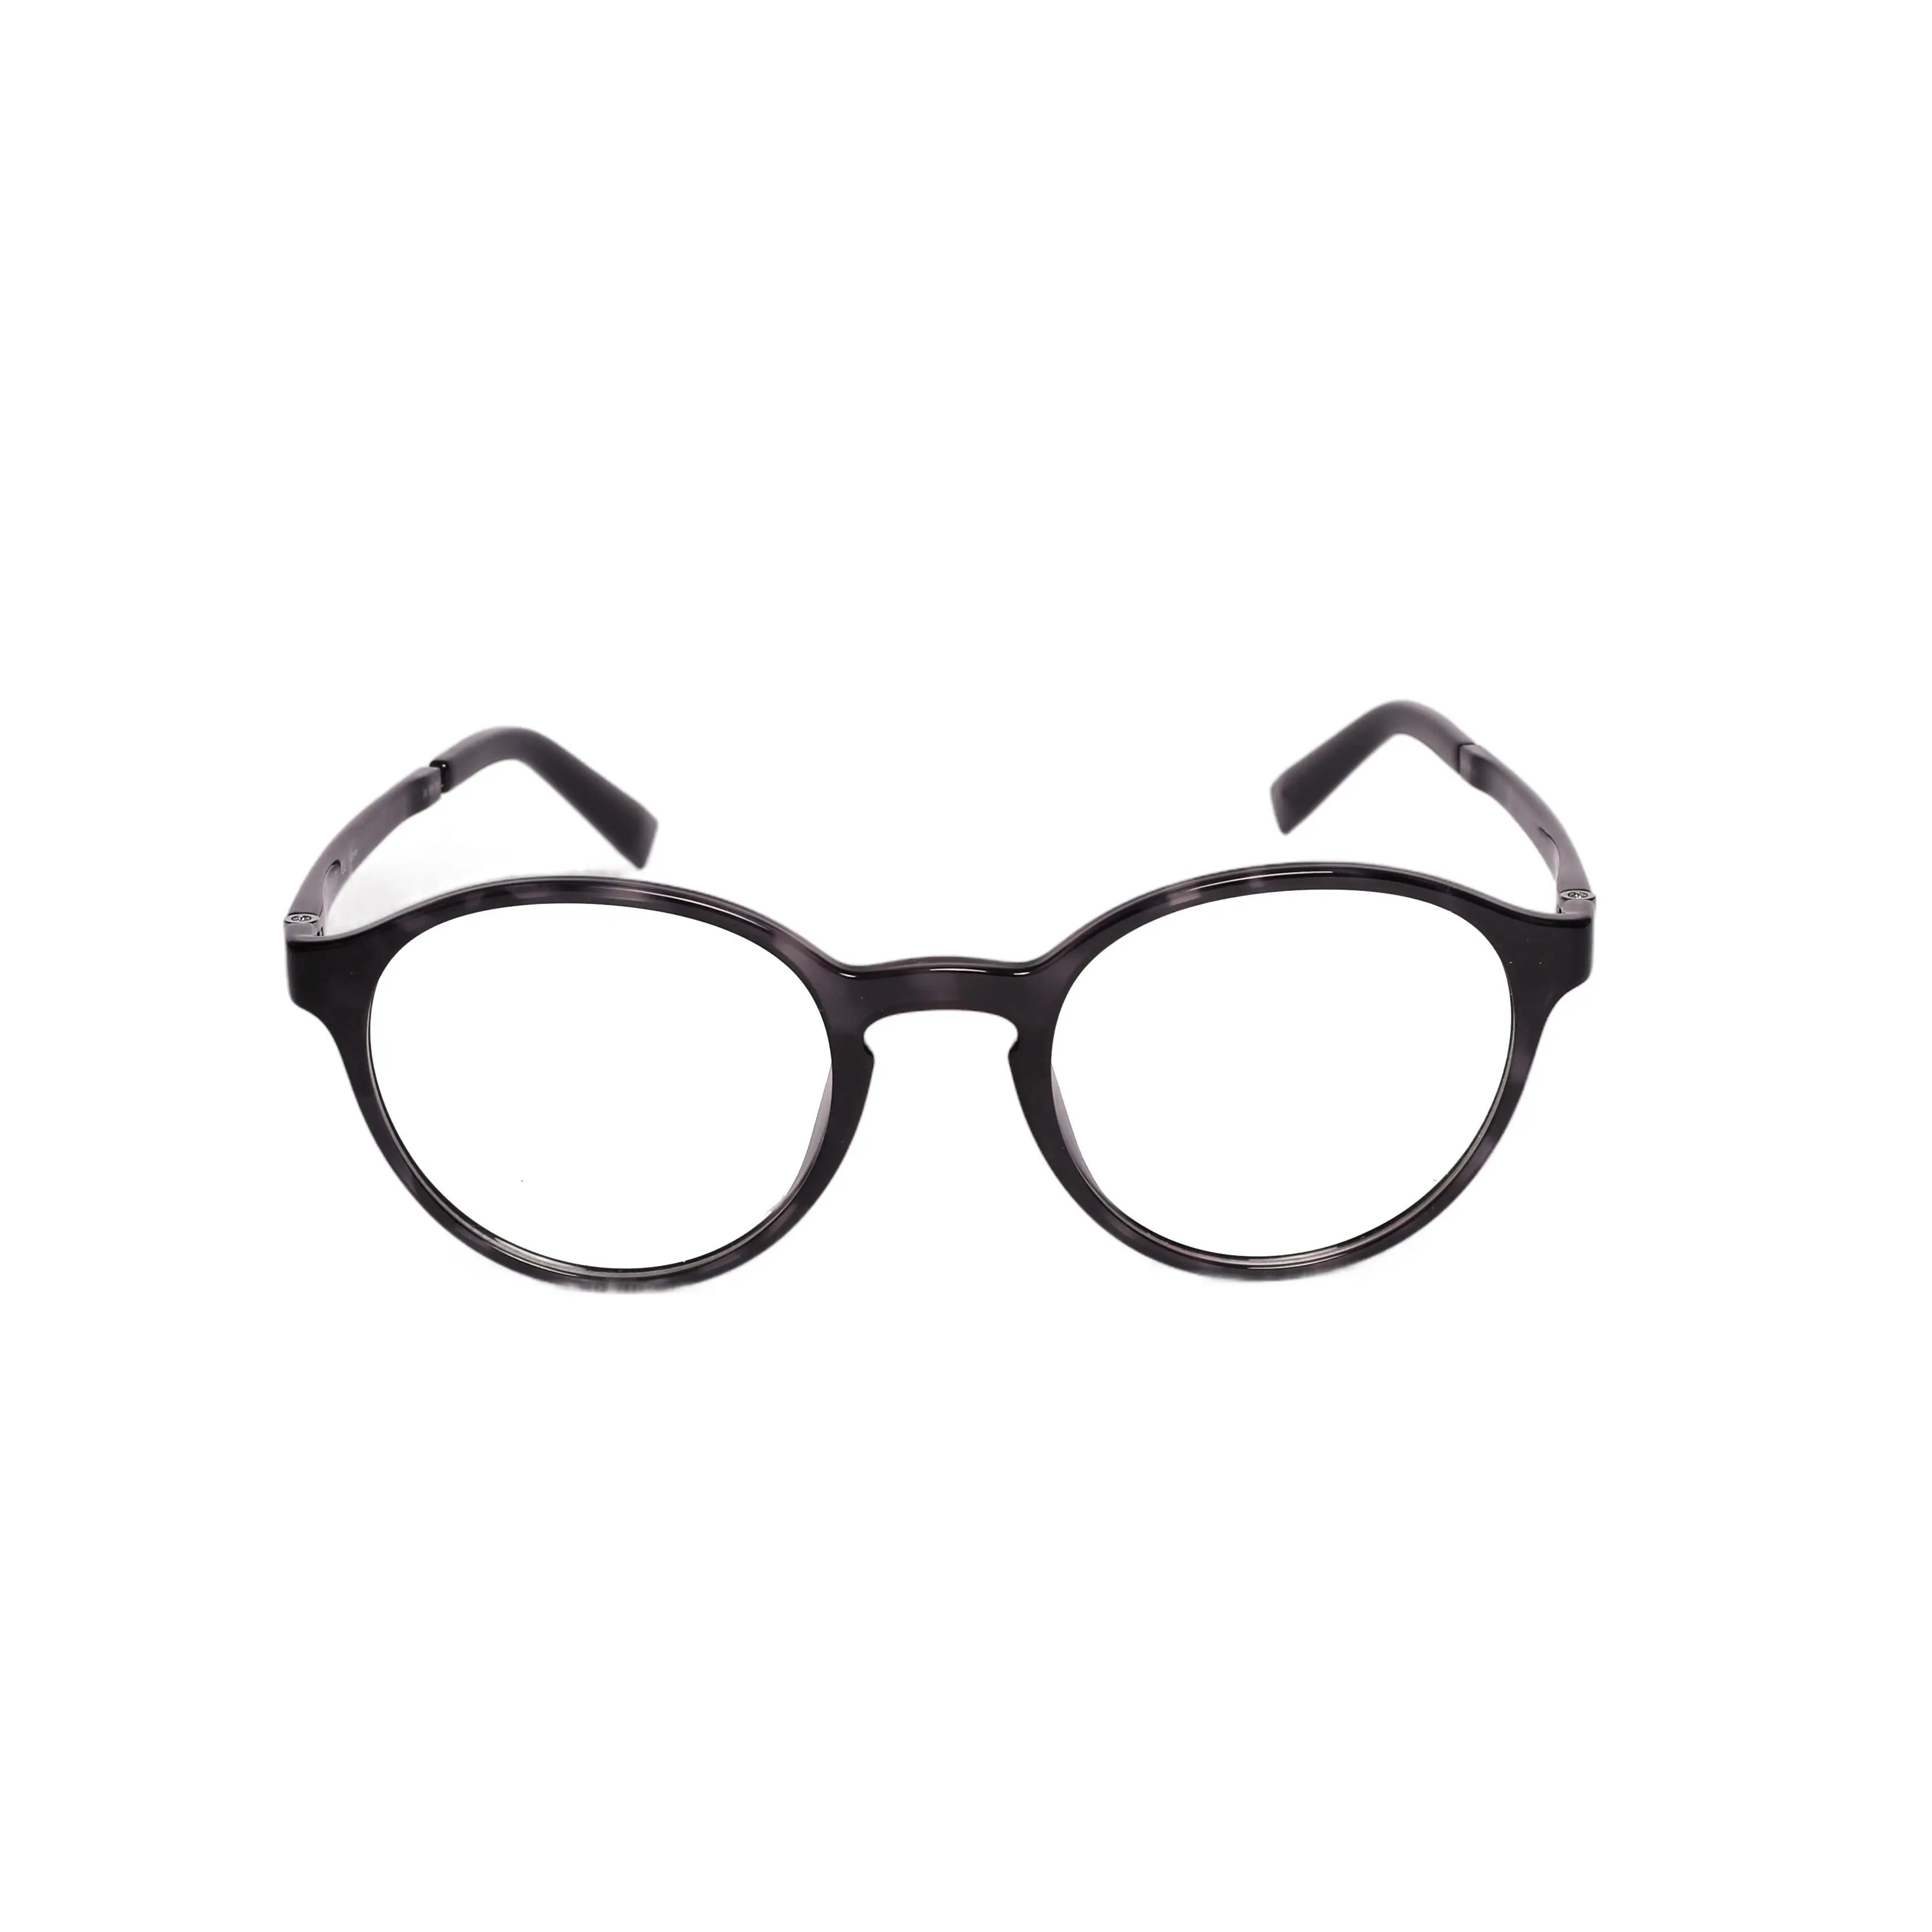 ESPRIT-ET-17558-49-505 Eyeglasses - Premium Eyeglasses from ESPRIT - Just Rs. 6150! Shop now at Laxmi Opticians